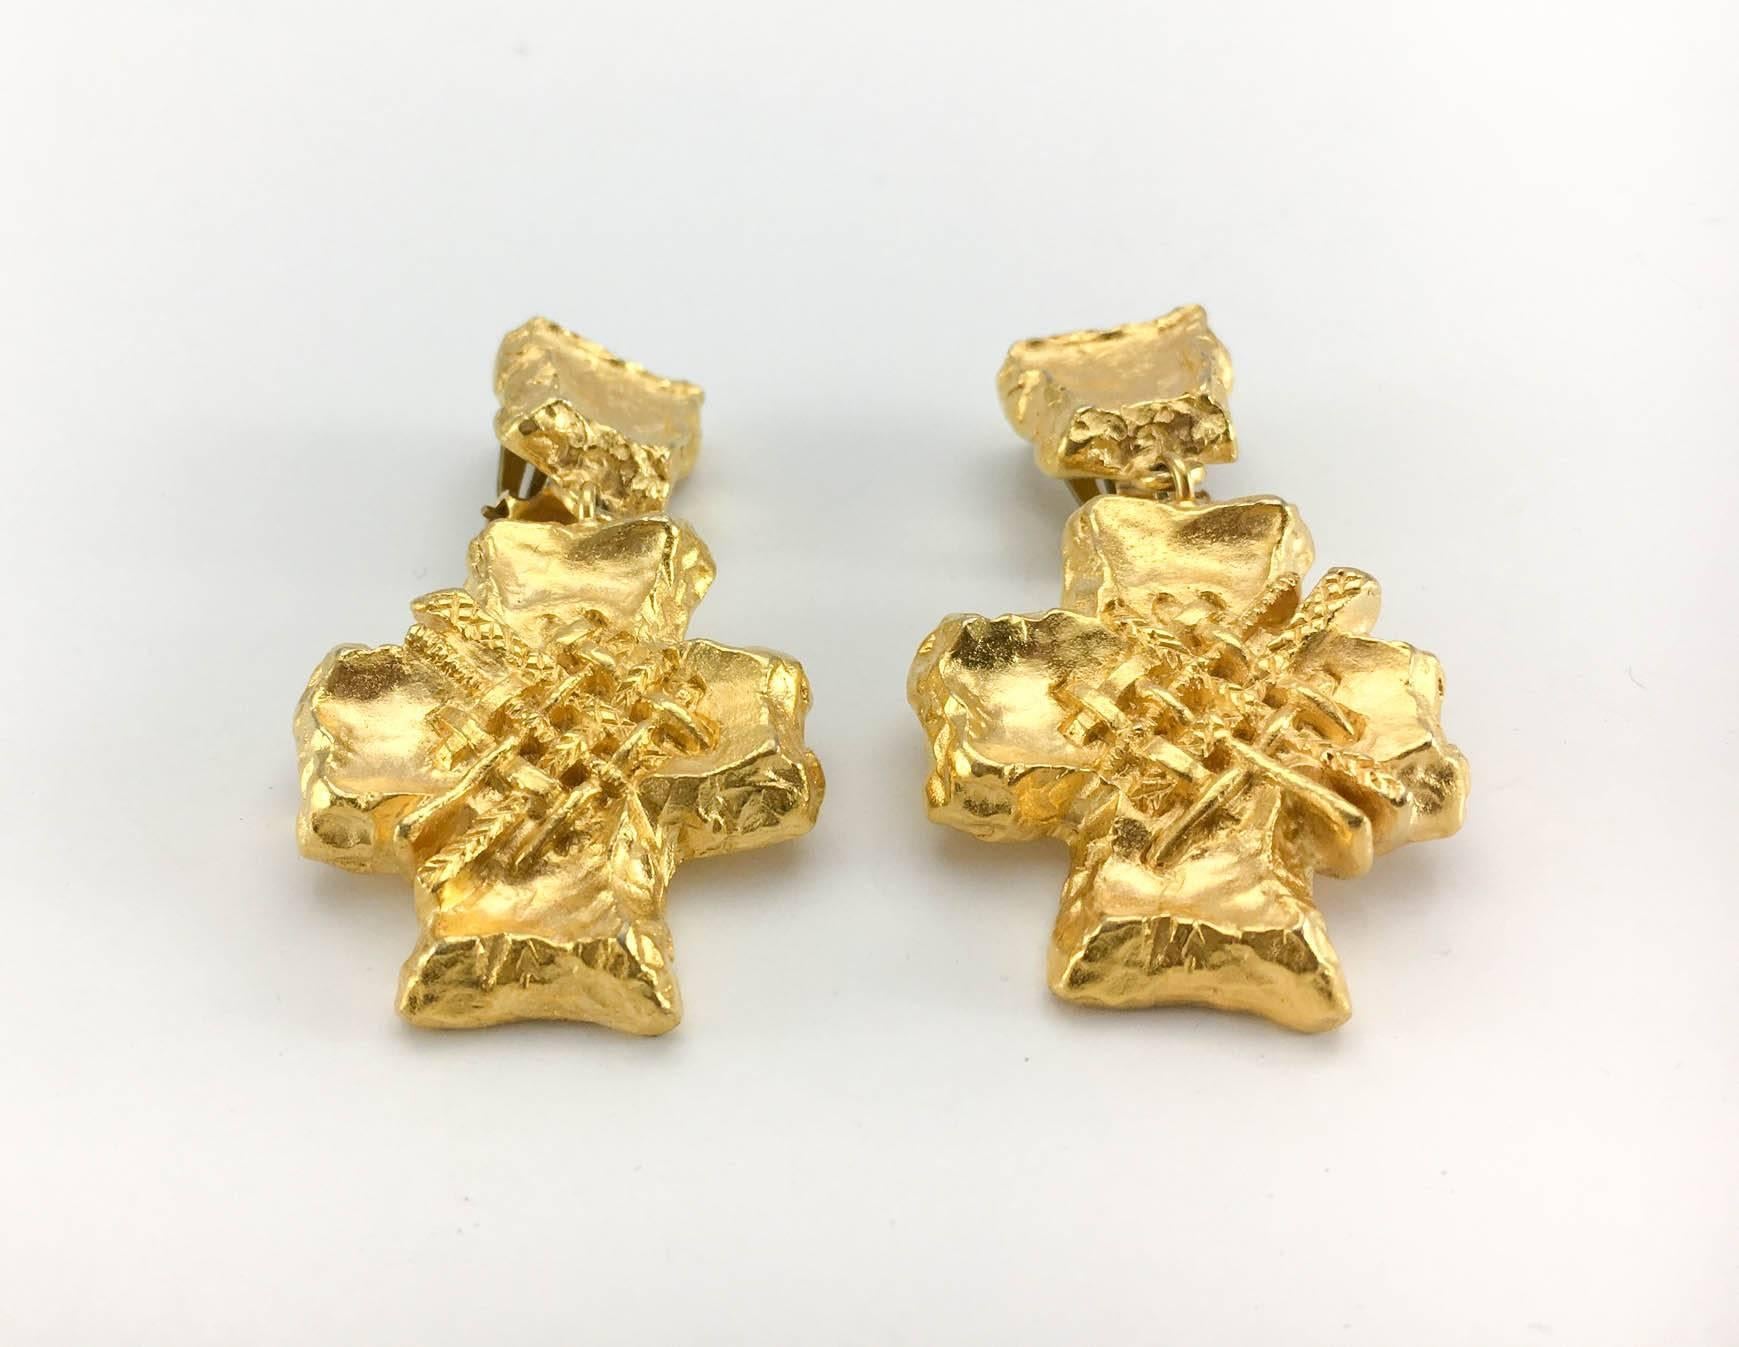 Women's Lacroix Stylized Gold-Plated Cross, by Goossens - 1980s